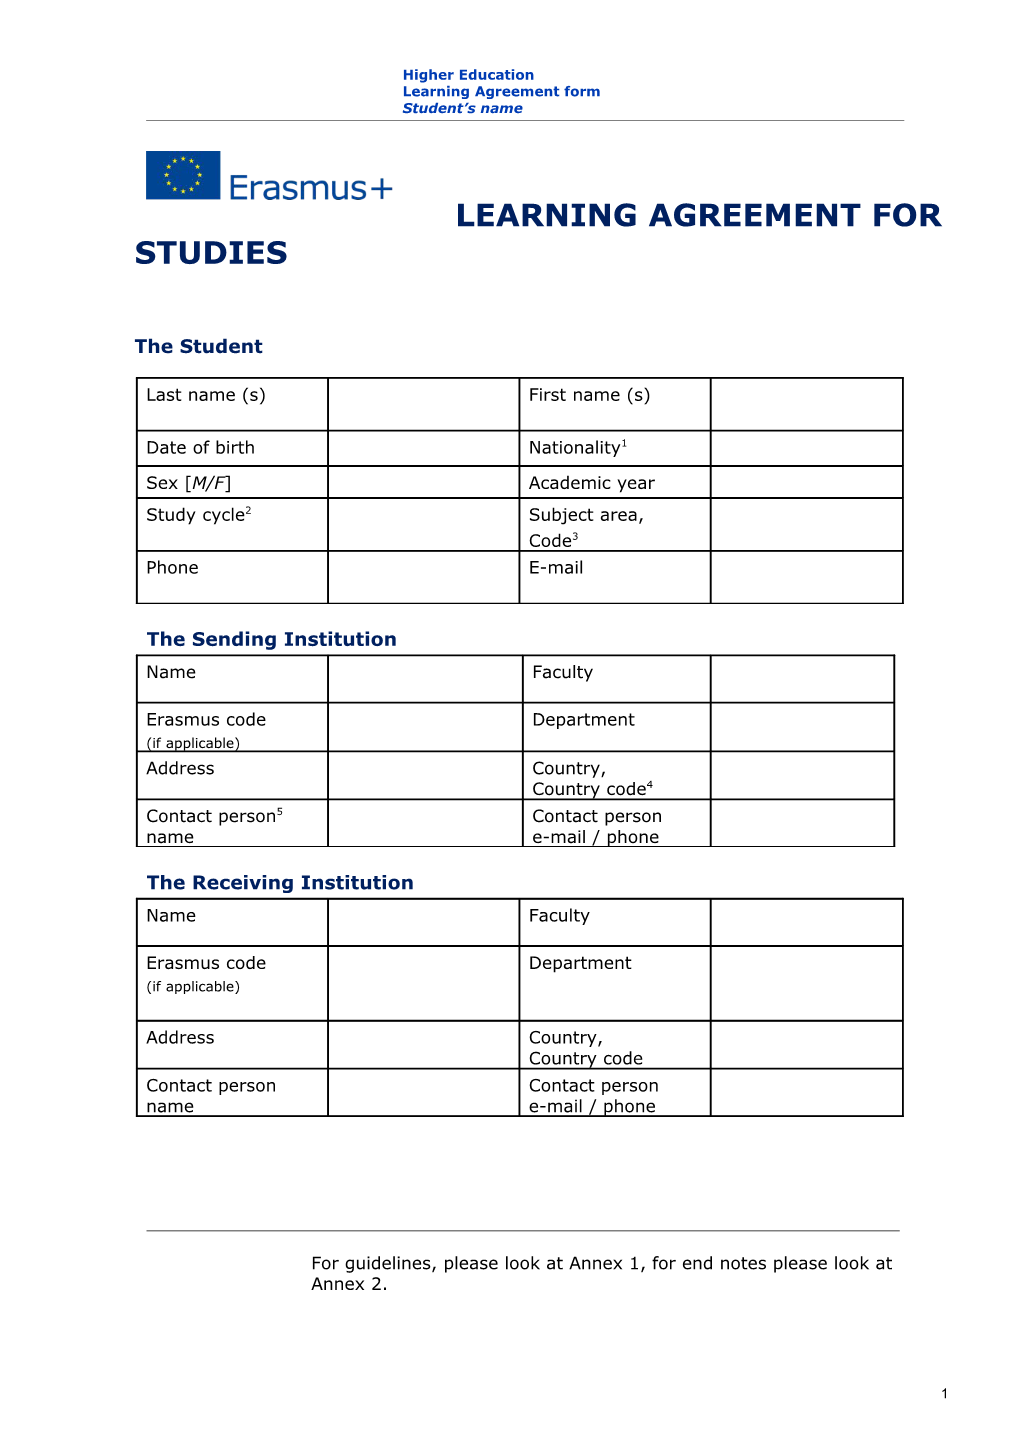 Learning Agreement for Studies s8